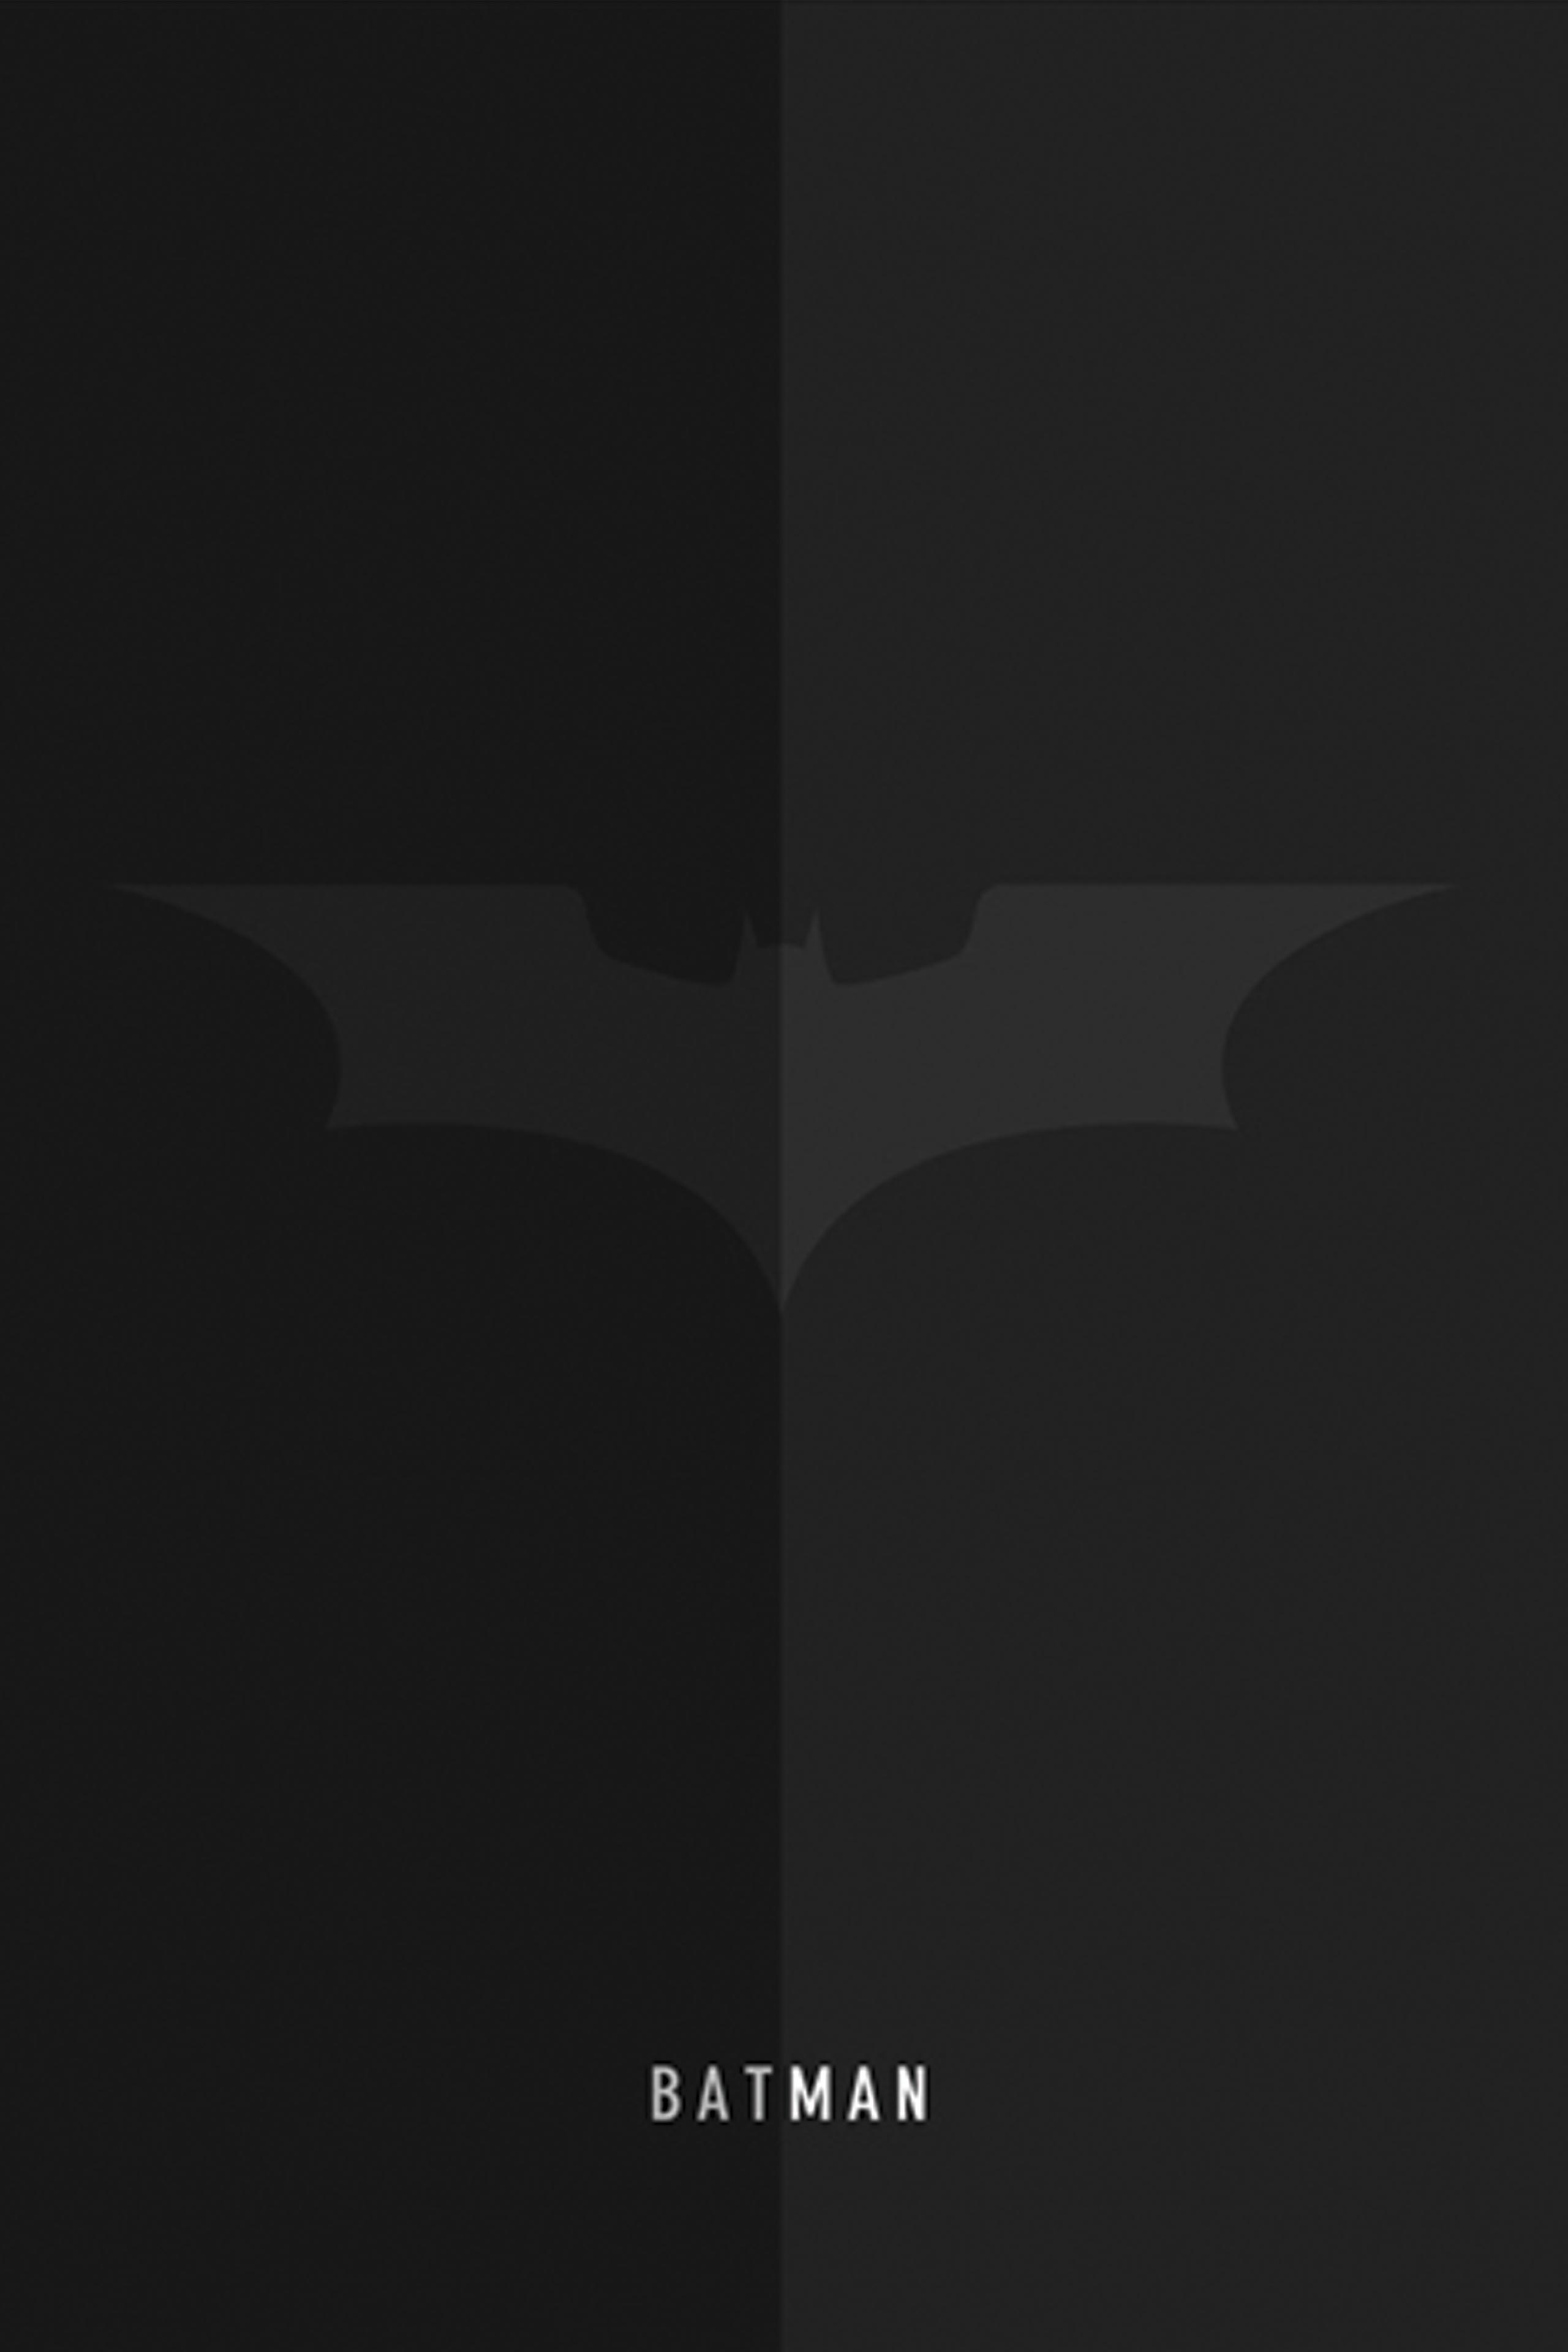 Batman Mobile Background. Batman